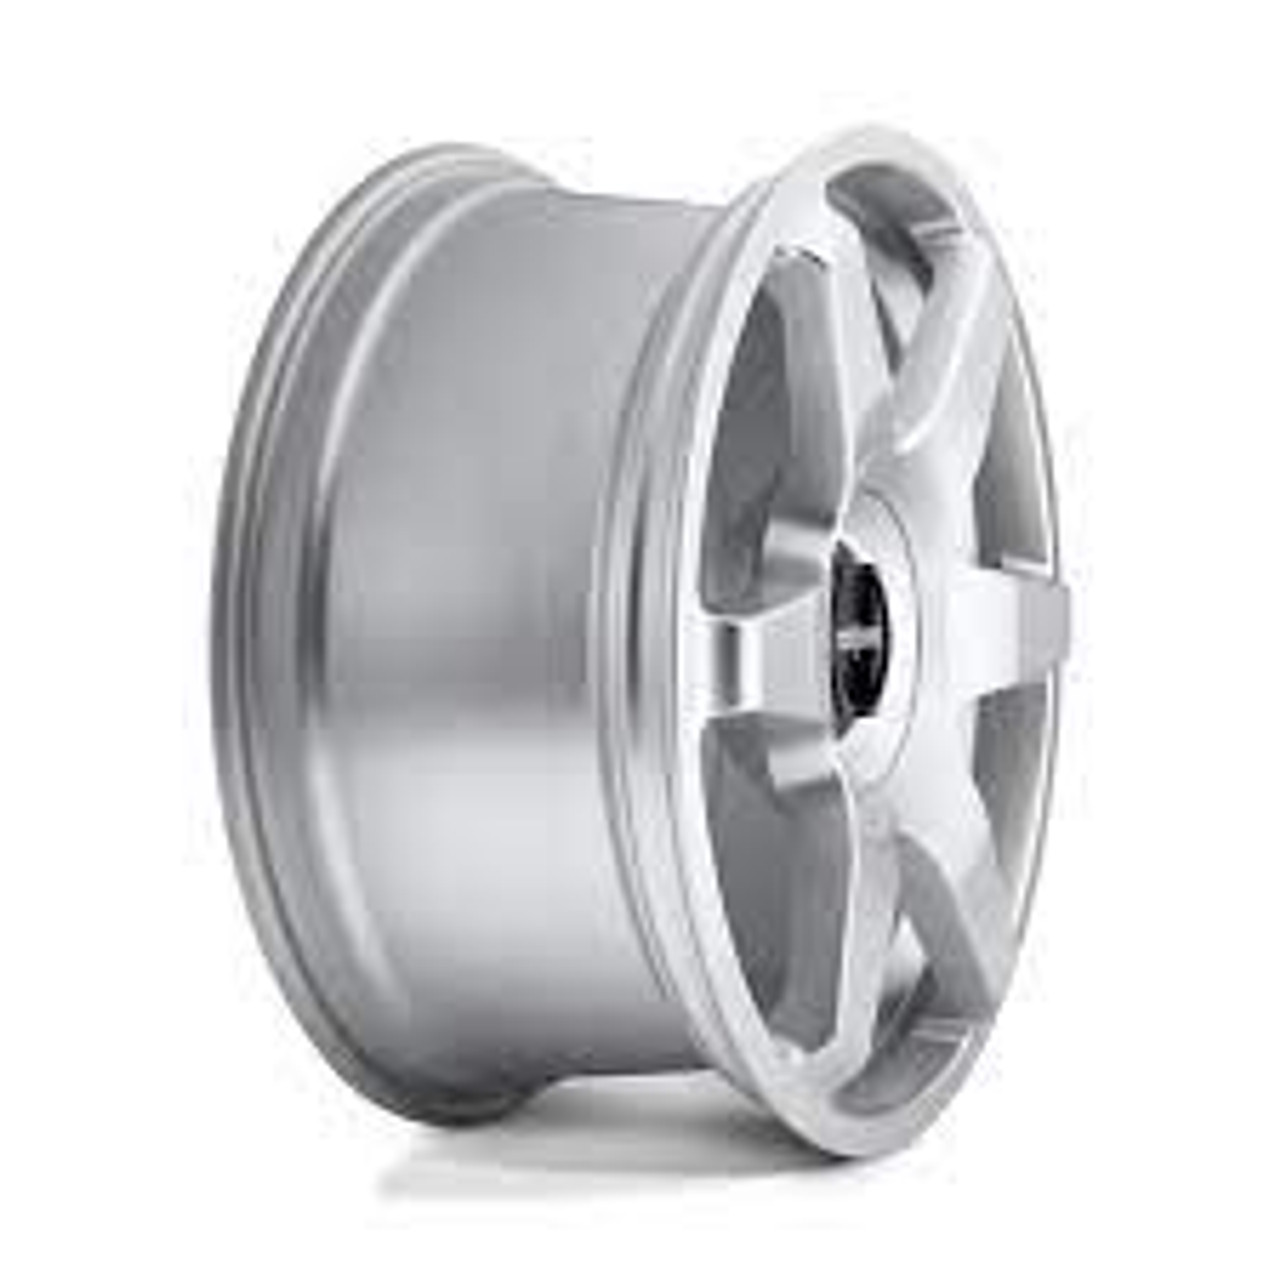 Rotiform R114 SIX Wheel 19x8.5 5x100/5x112 45 Offset - Gloss Silver